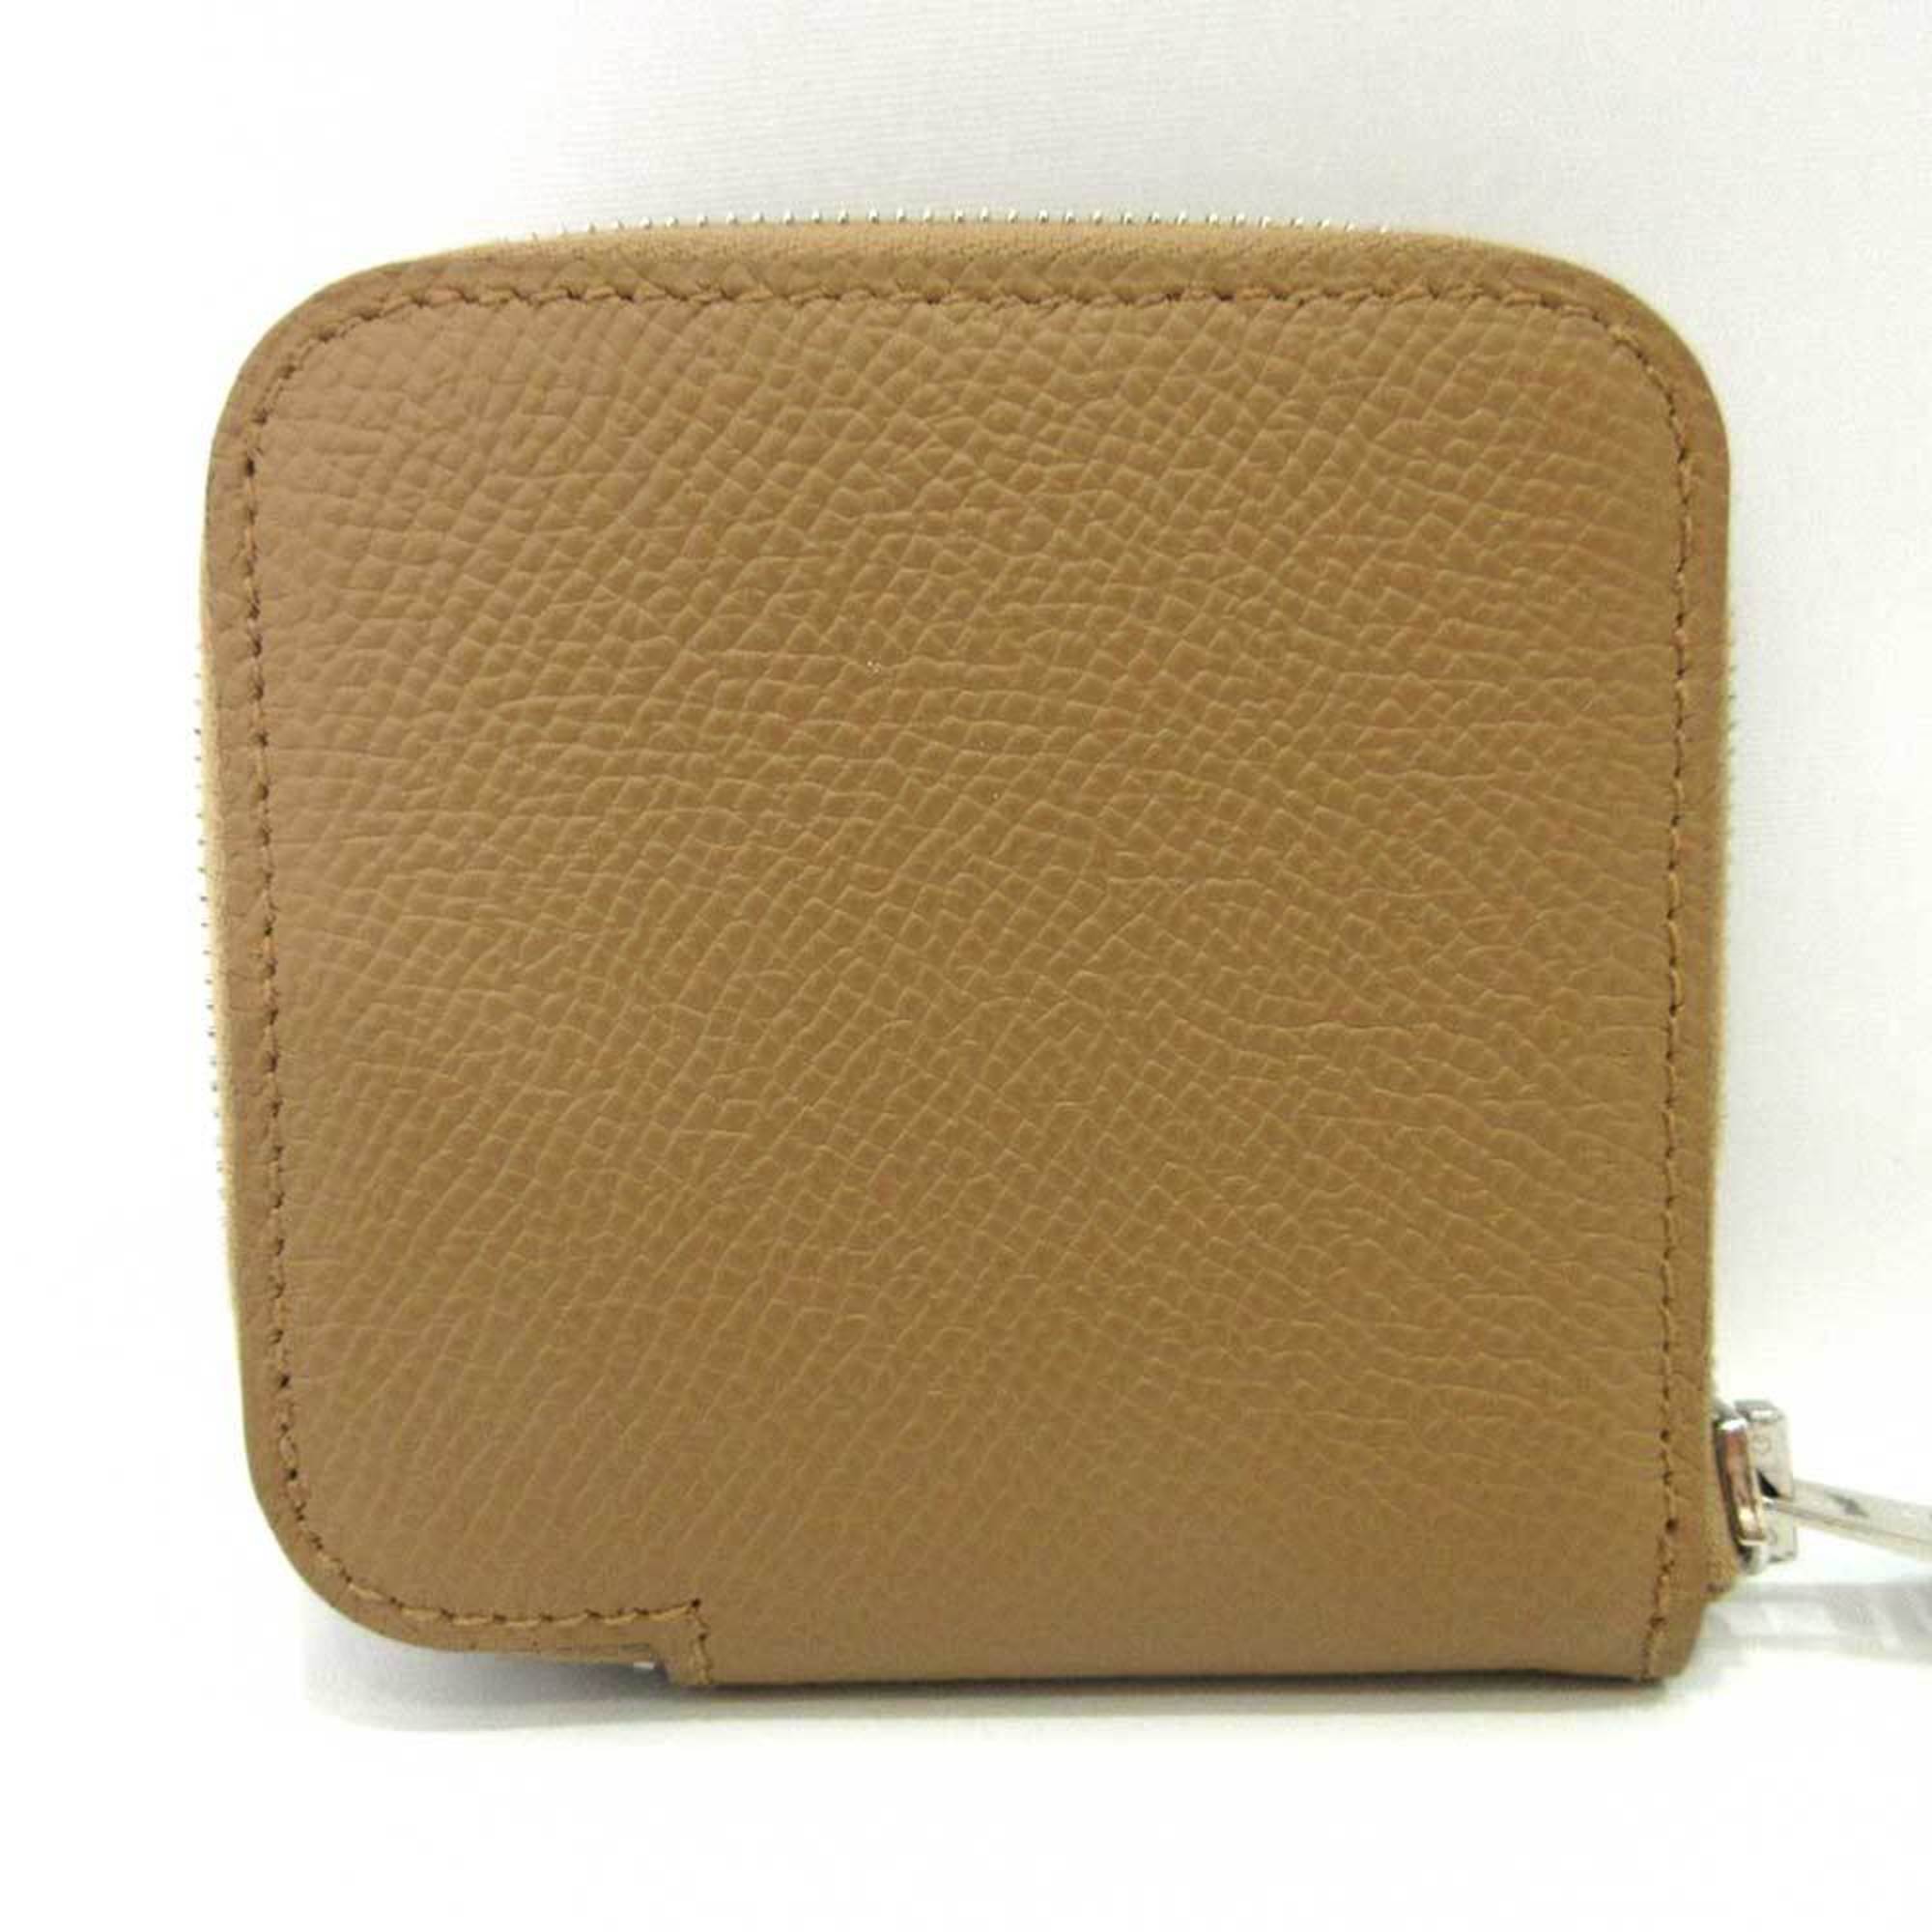 Hermes Wallet Azap Compact Silk-in Brown Coin Case Purse Square Round Zipper Women's Vaux Epsom HERMES